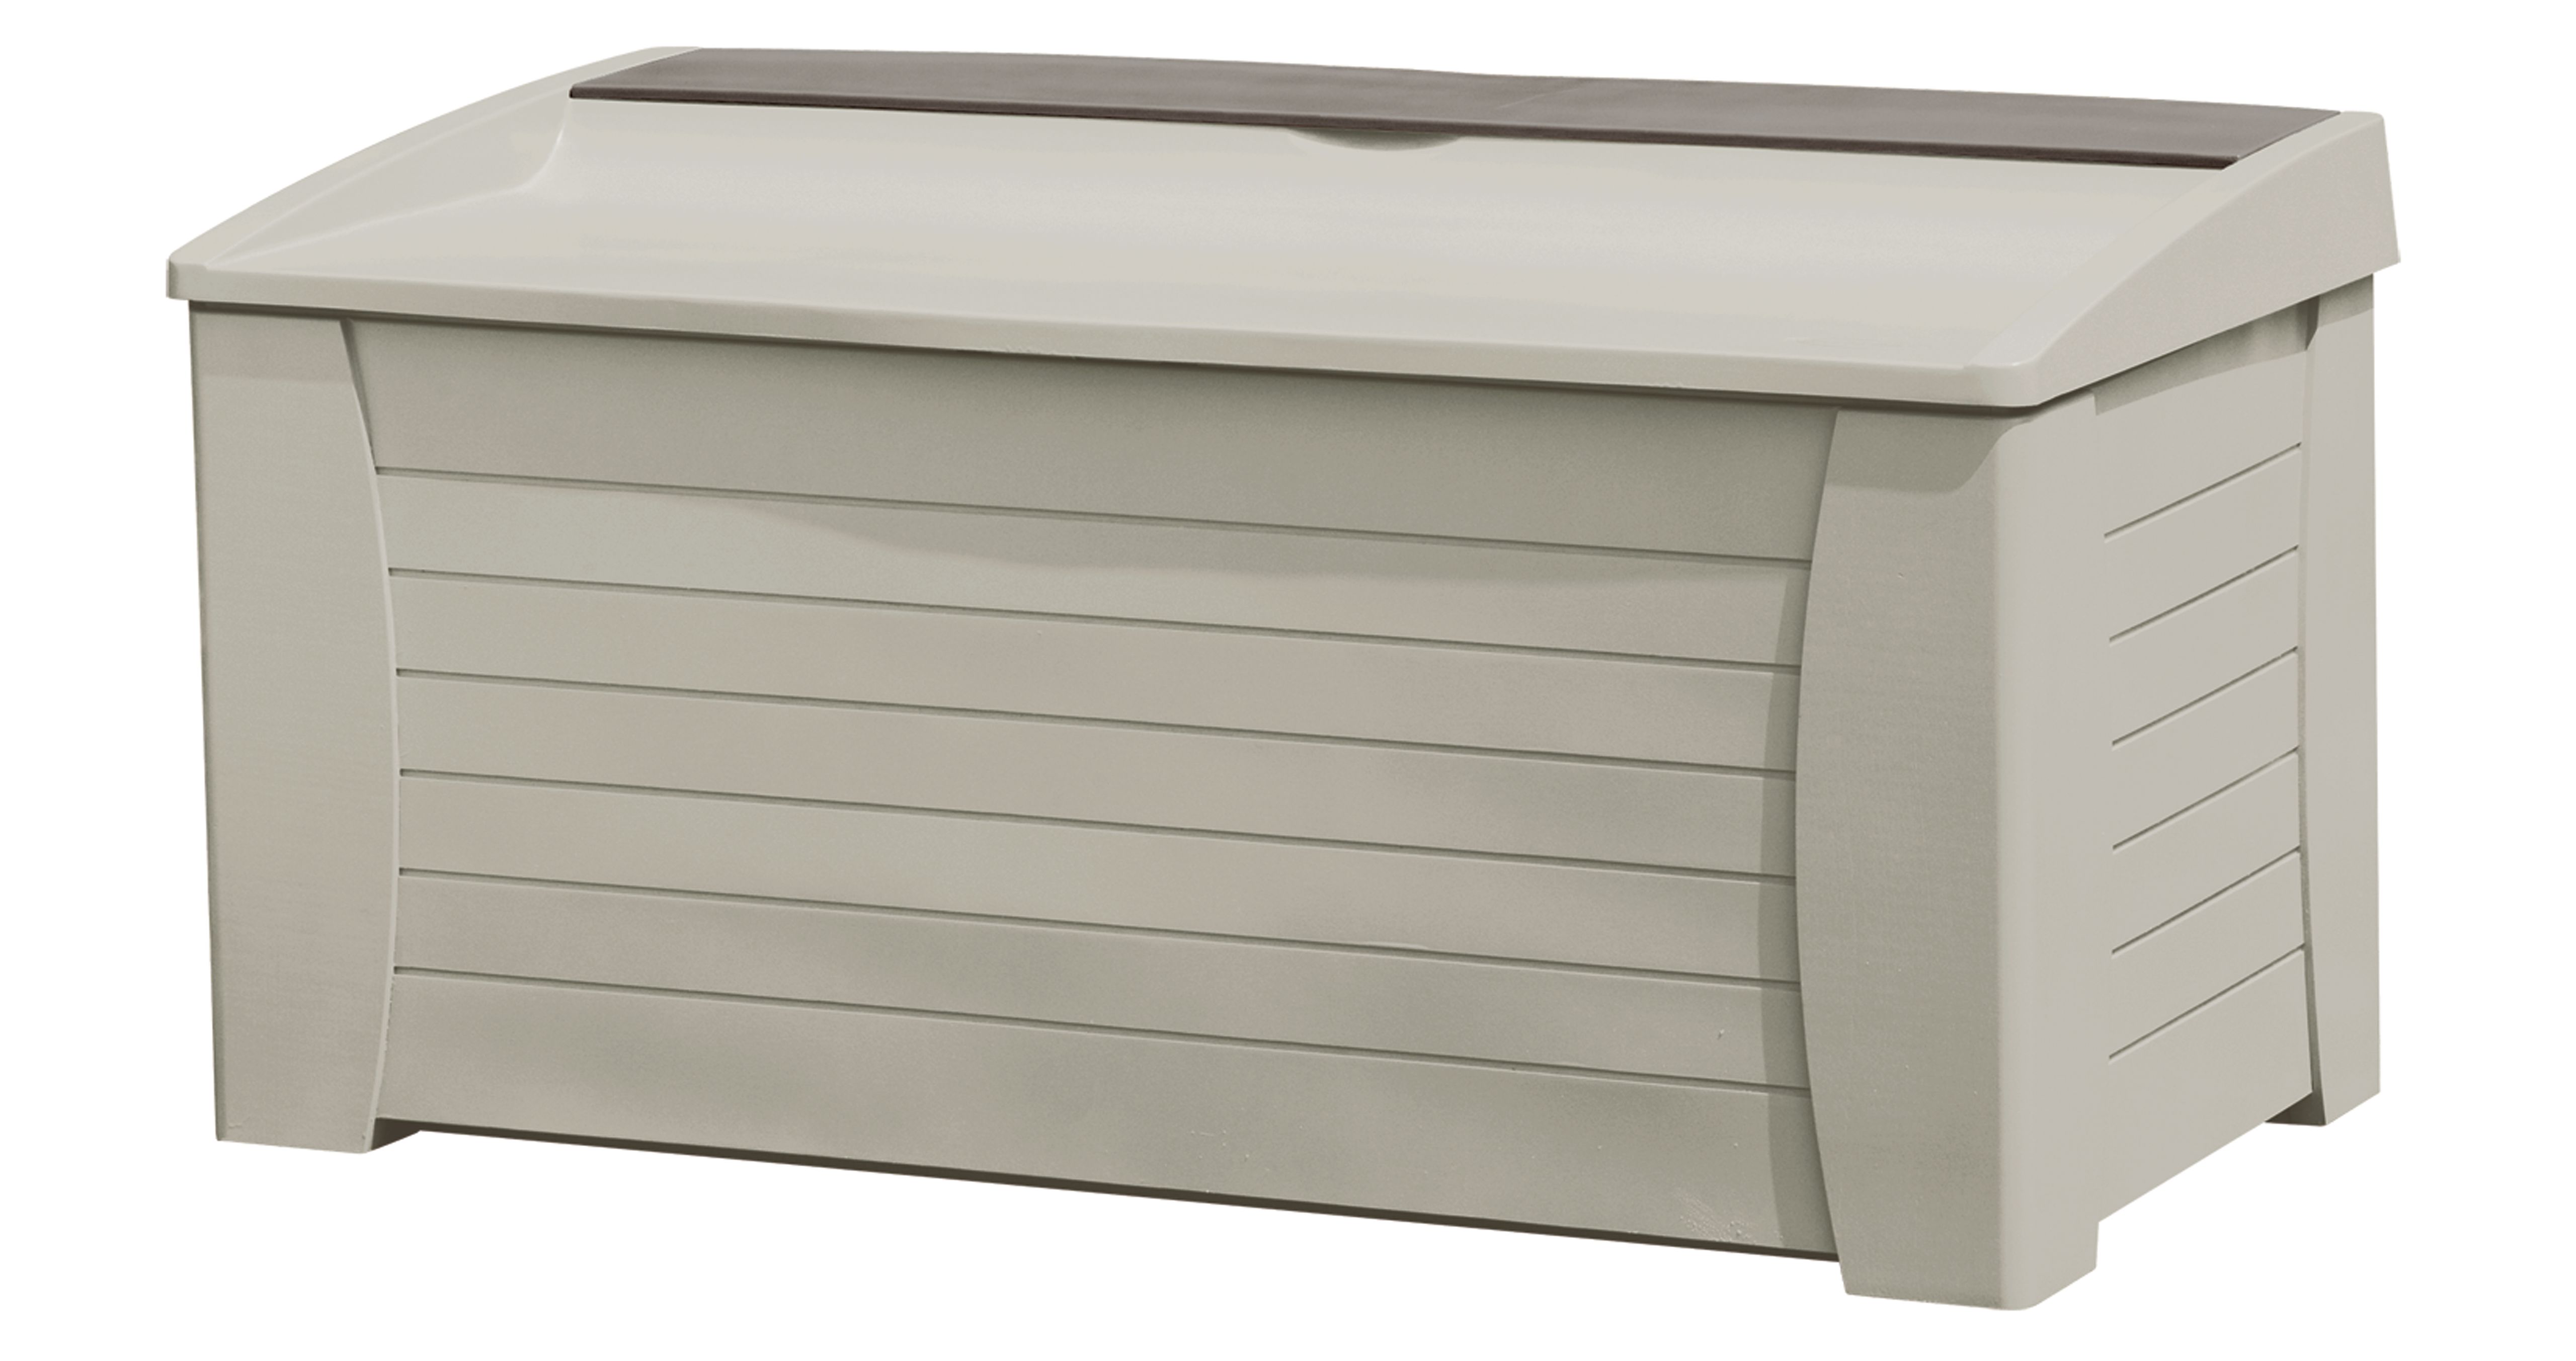 Suncast 127 Gallon Capacity Outdoor Patio Storage Deck Box, Resin, w/ Seat, Taupe, 54.5 in D x 27 in H x 28 in W, 35 lb - image 1 of 6